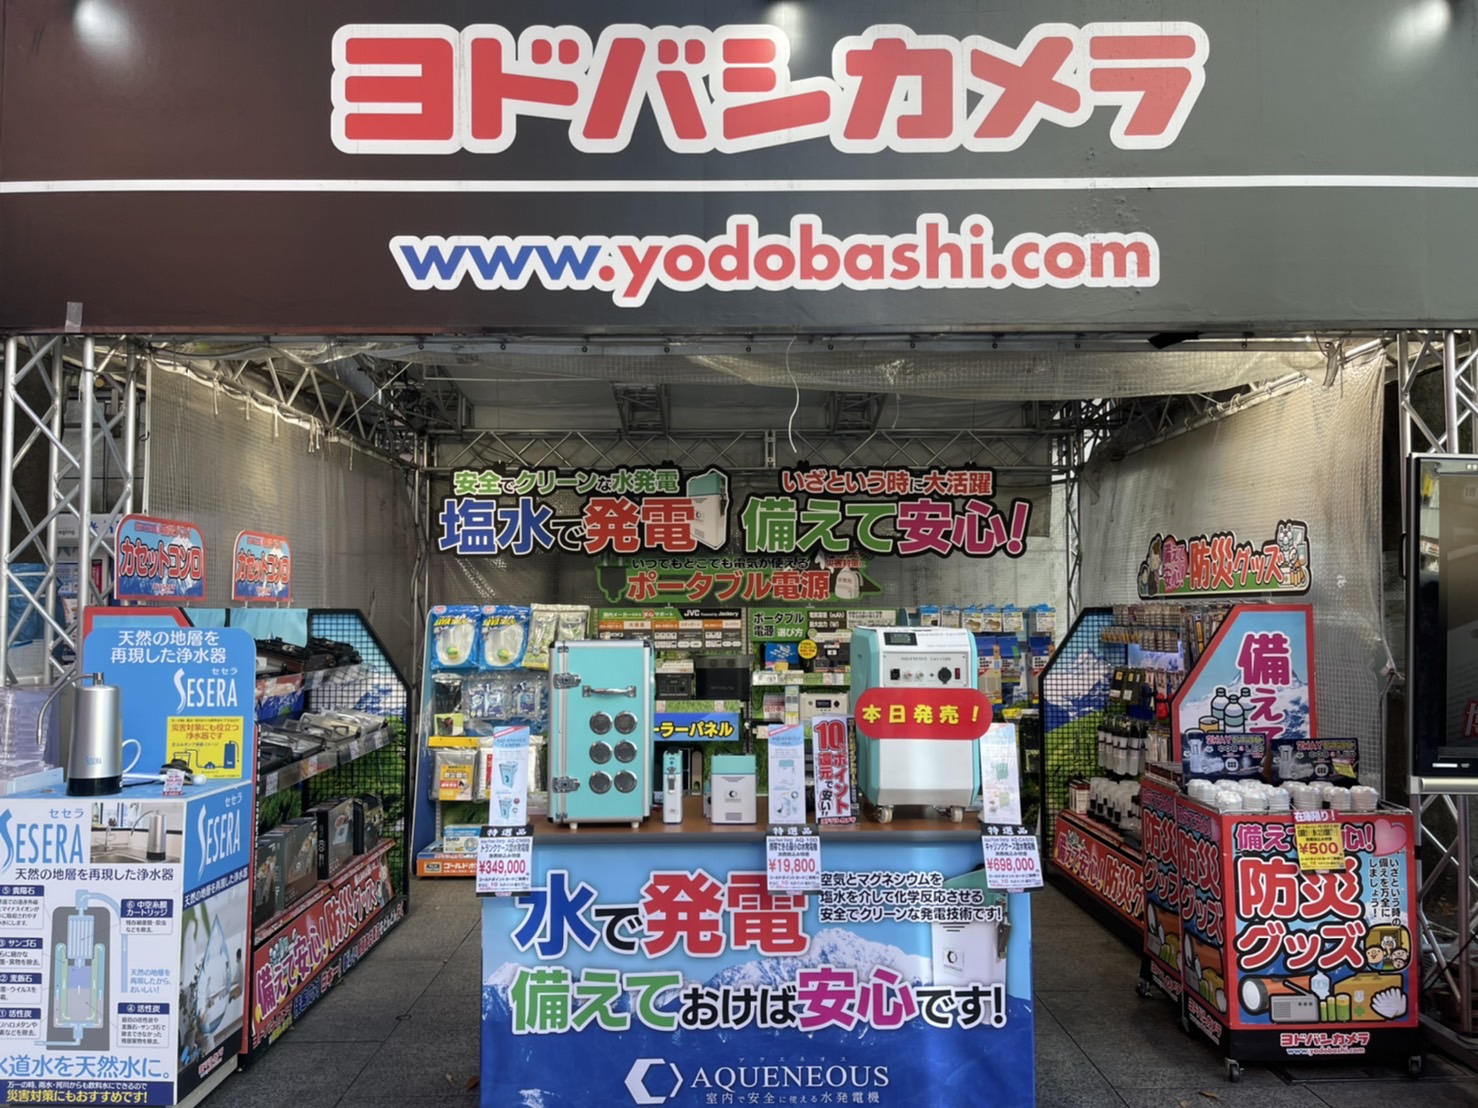 We will start selling at home electronics mass retailers Yodobashi Camera and Bic Camera!